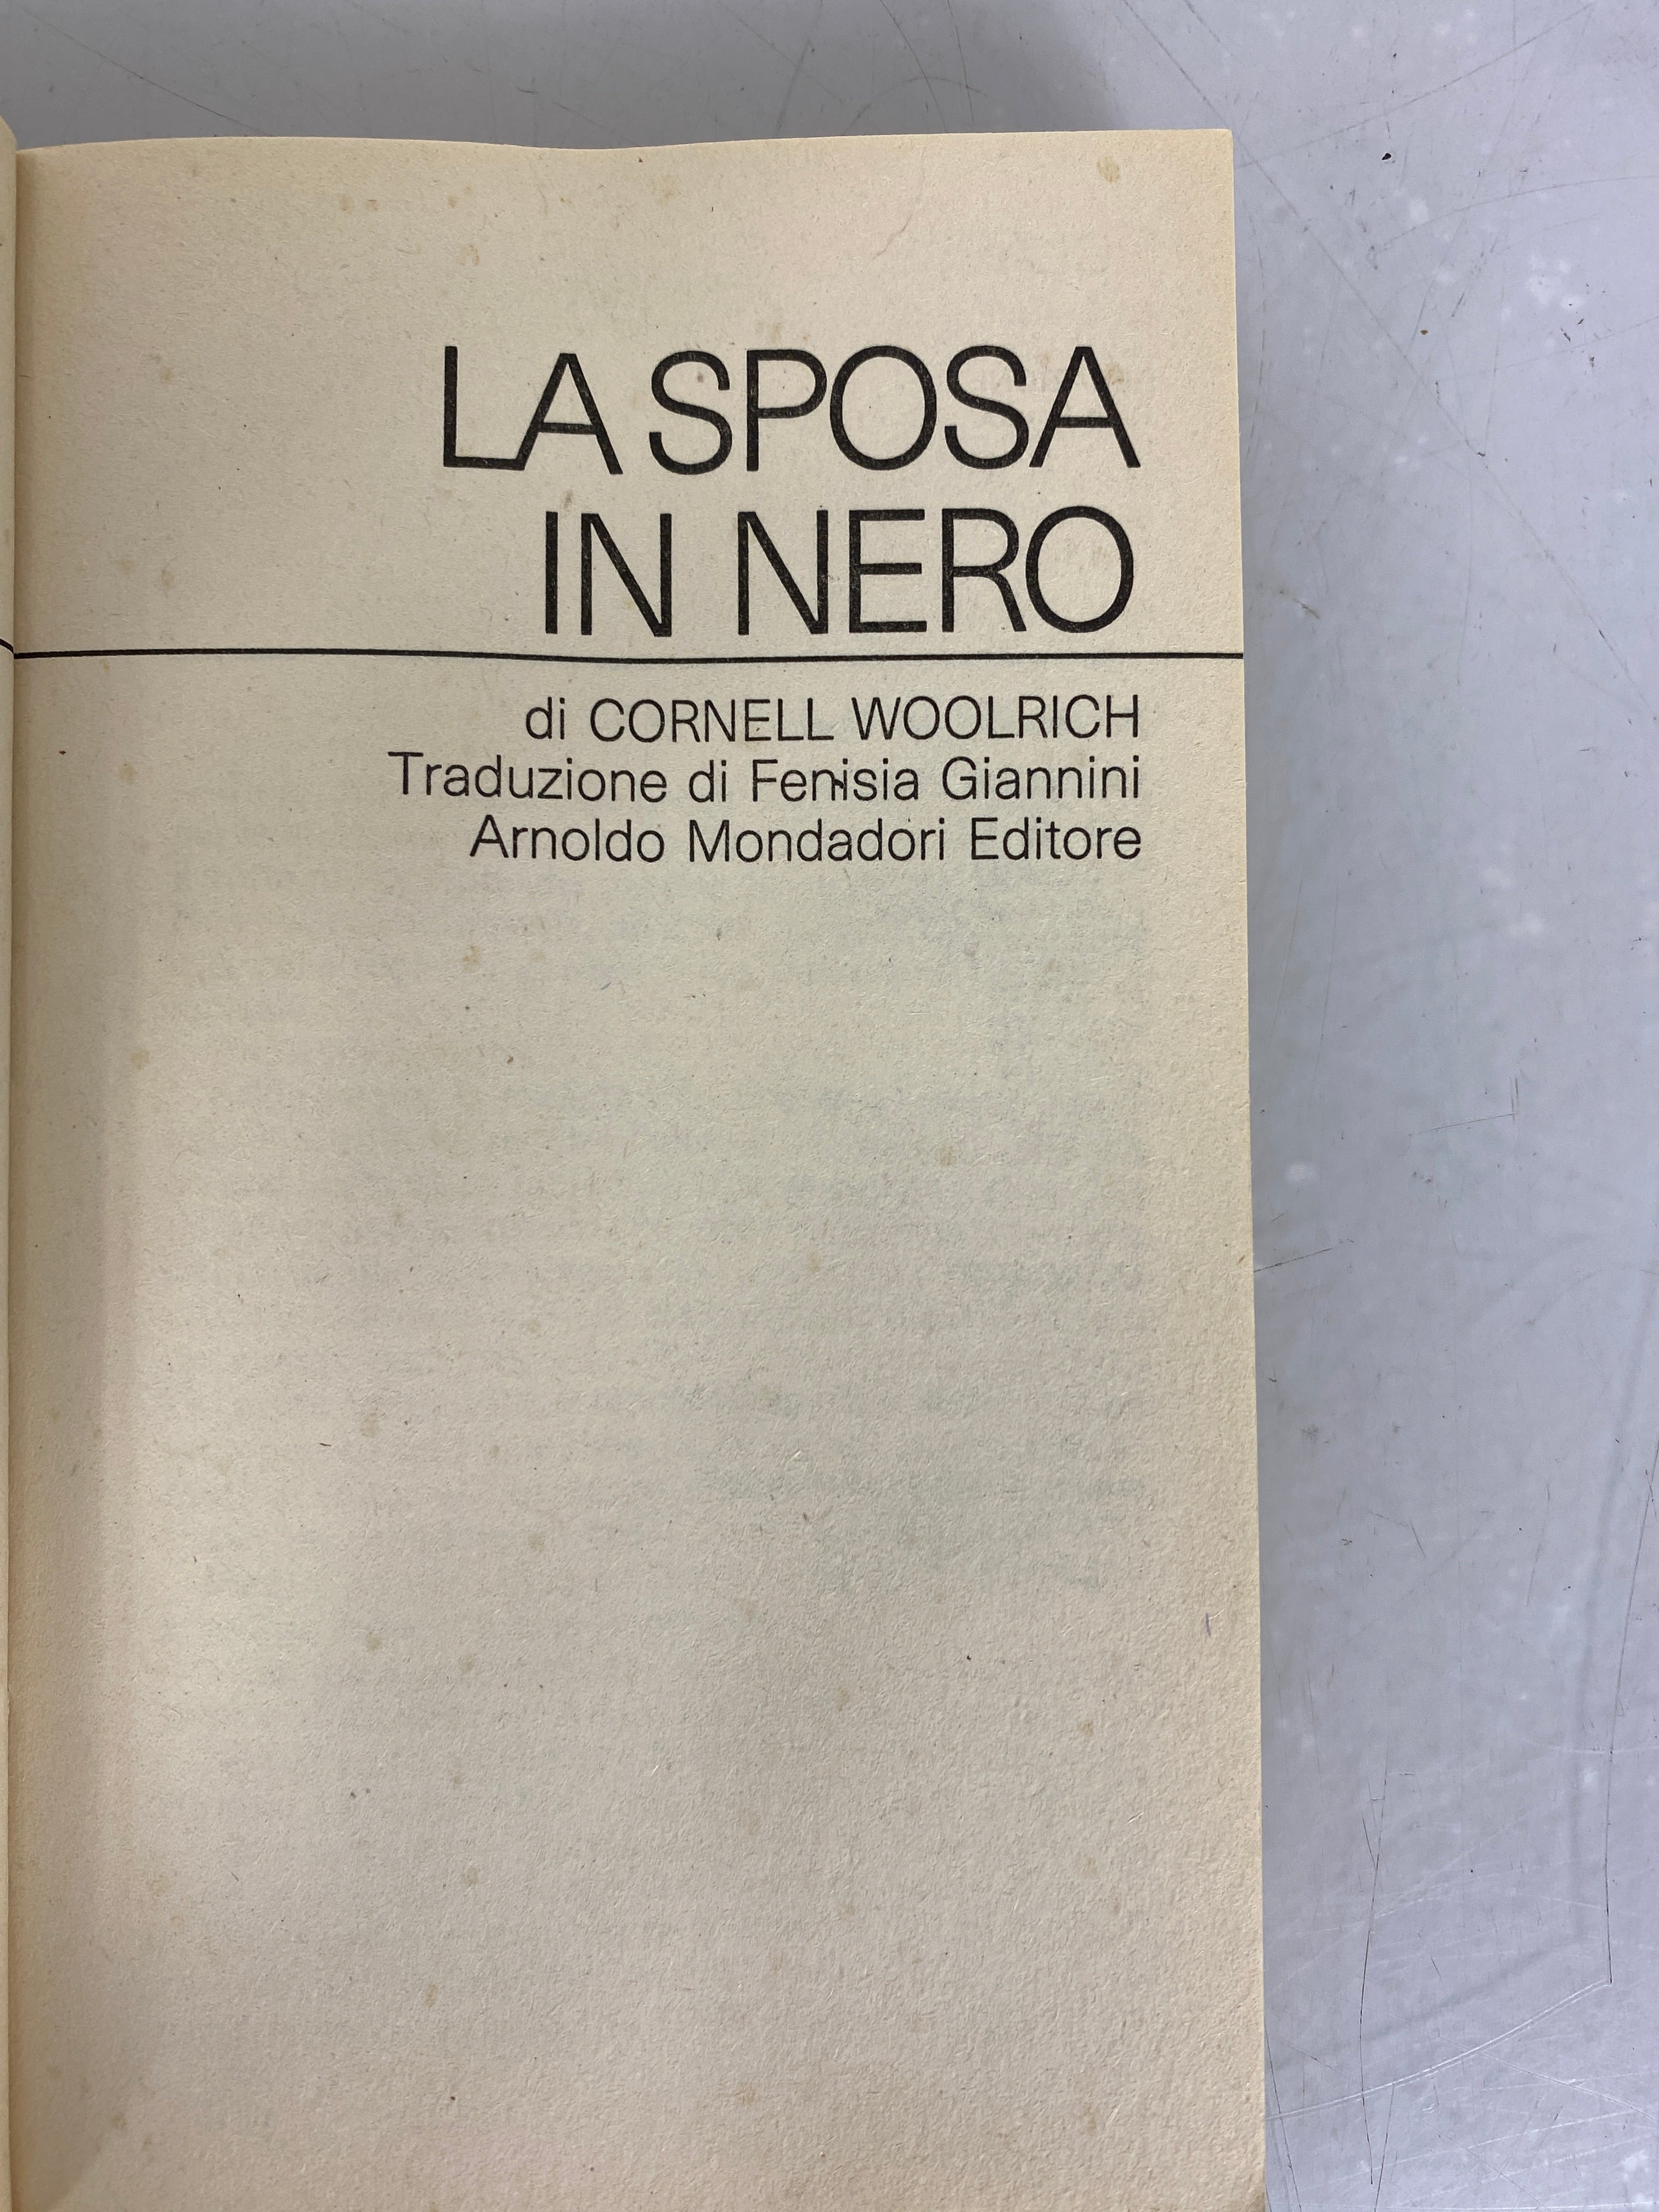 Lot of 4 Italian Language Mystery Novels I Classici Del Giallo Mondadori 1987-1992 SC